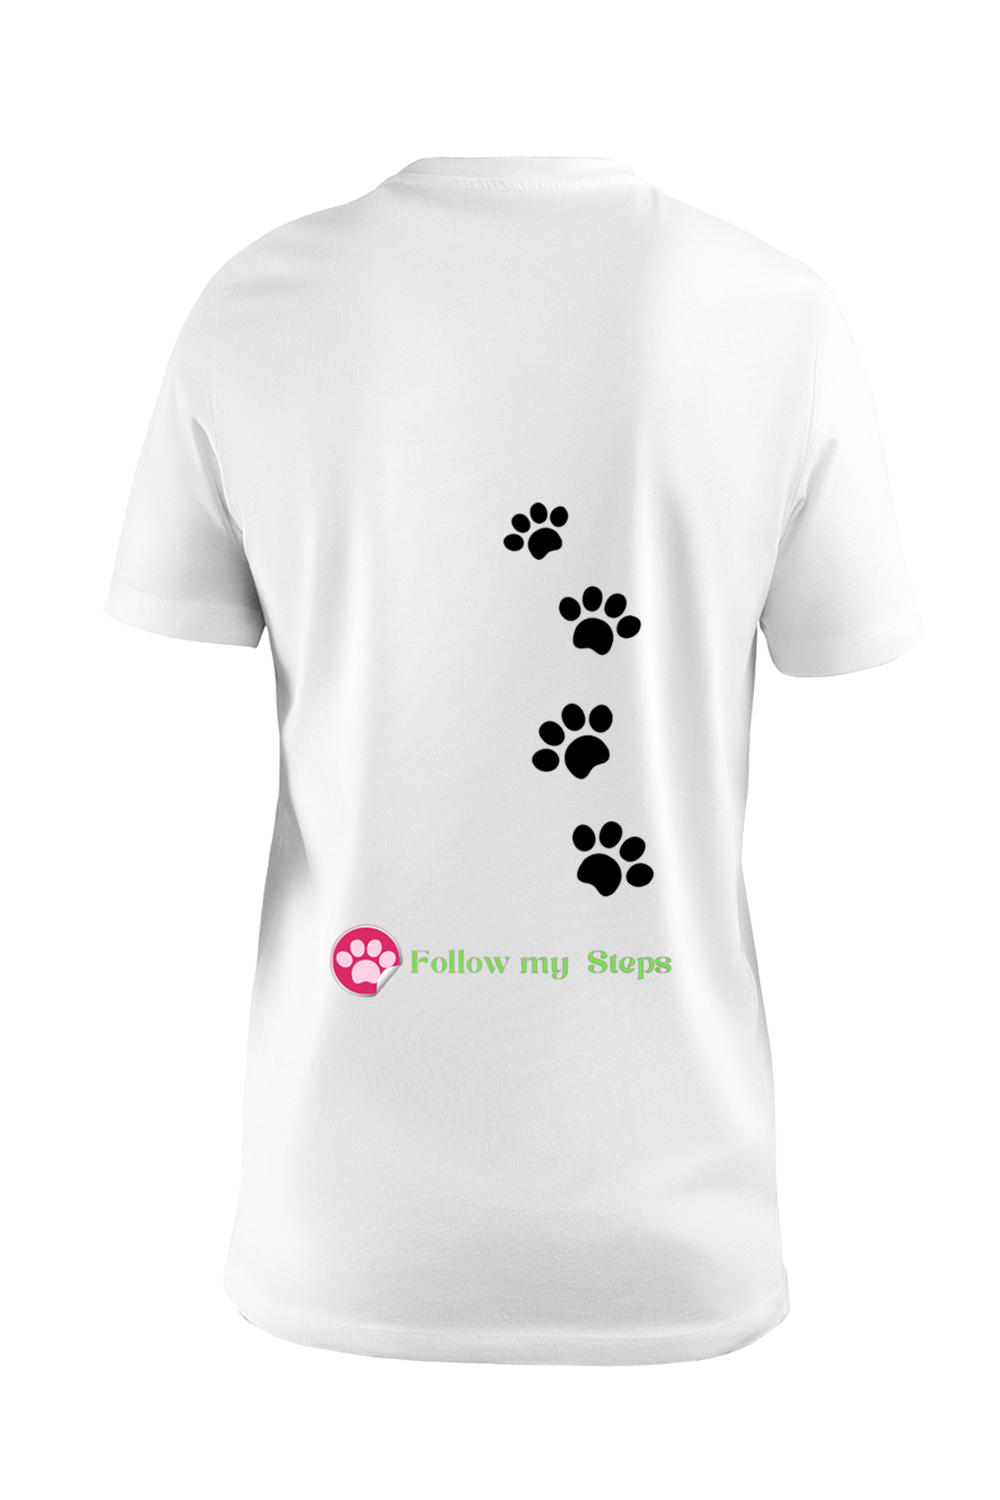 T-shirt printable design "Follow my steps" pinterest preview image.